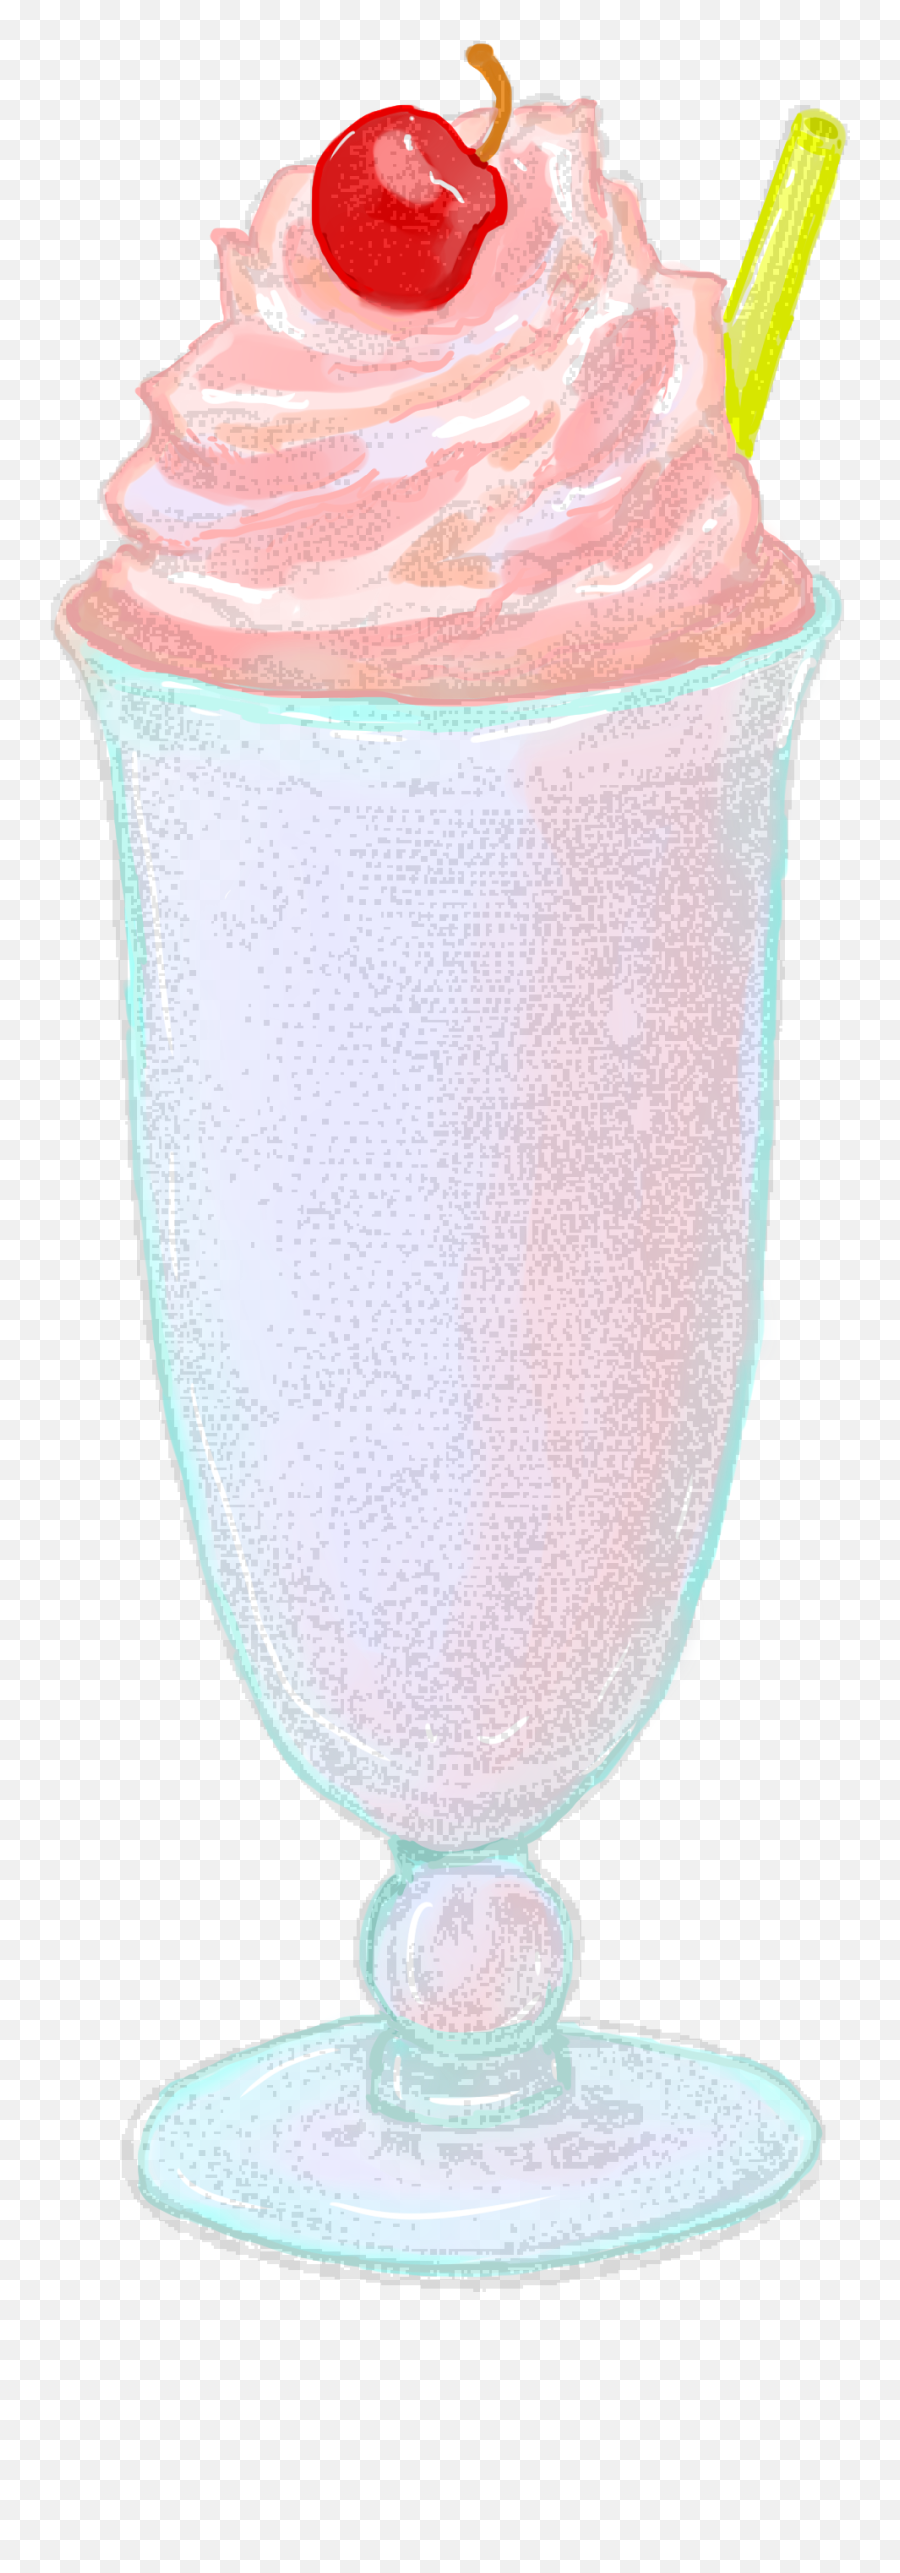 Milkshake In Tall Glass Drawing Free Image Download Emoji,Milkshake Png